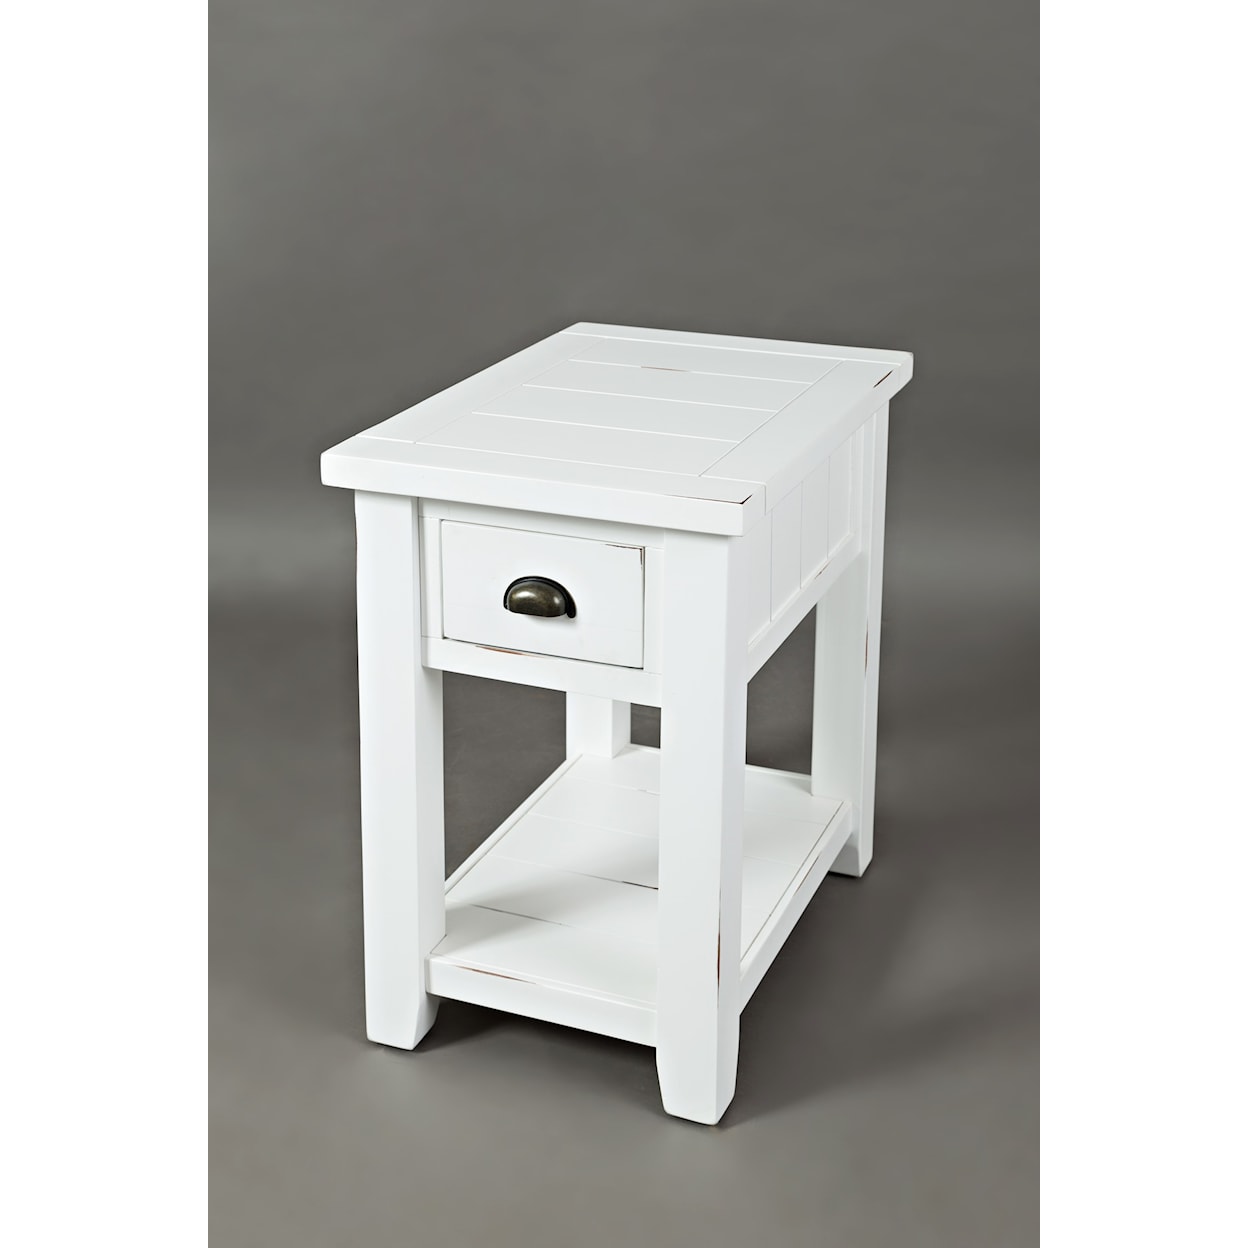 VFM Signature Artisan's Craft Chairside Table